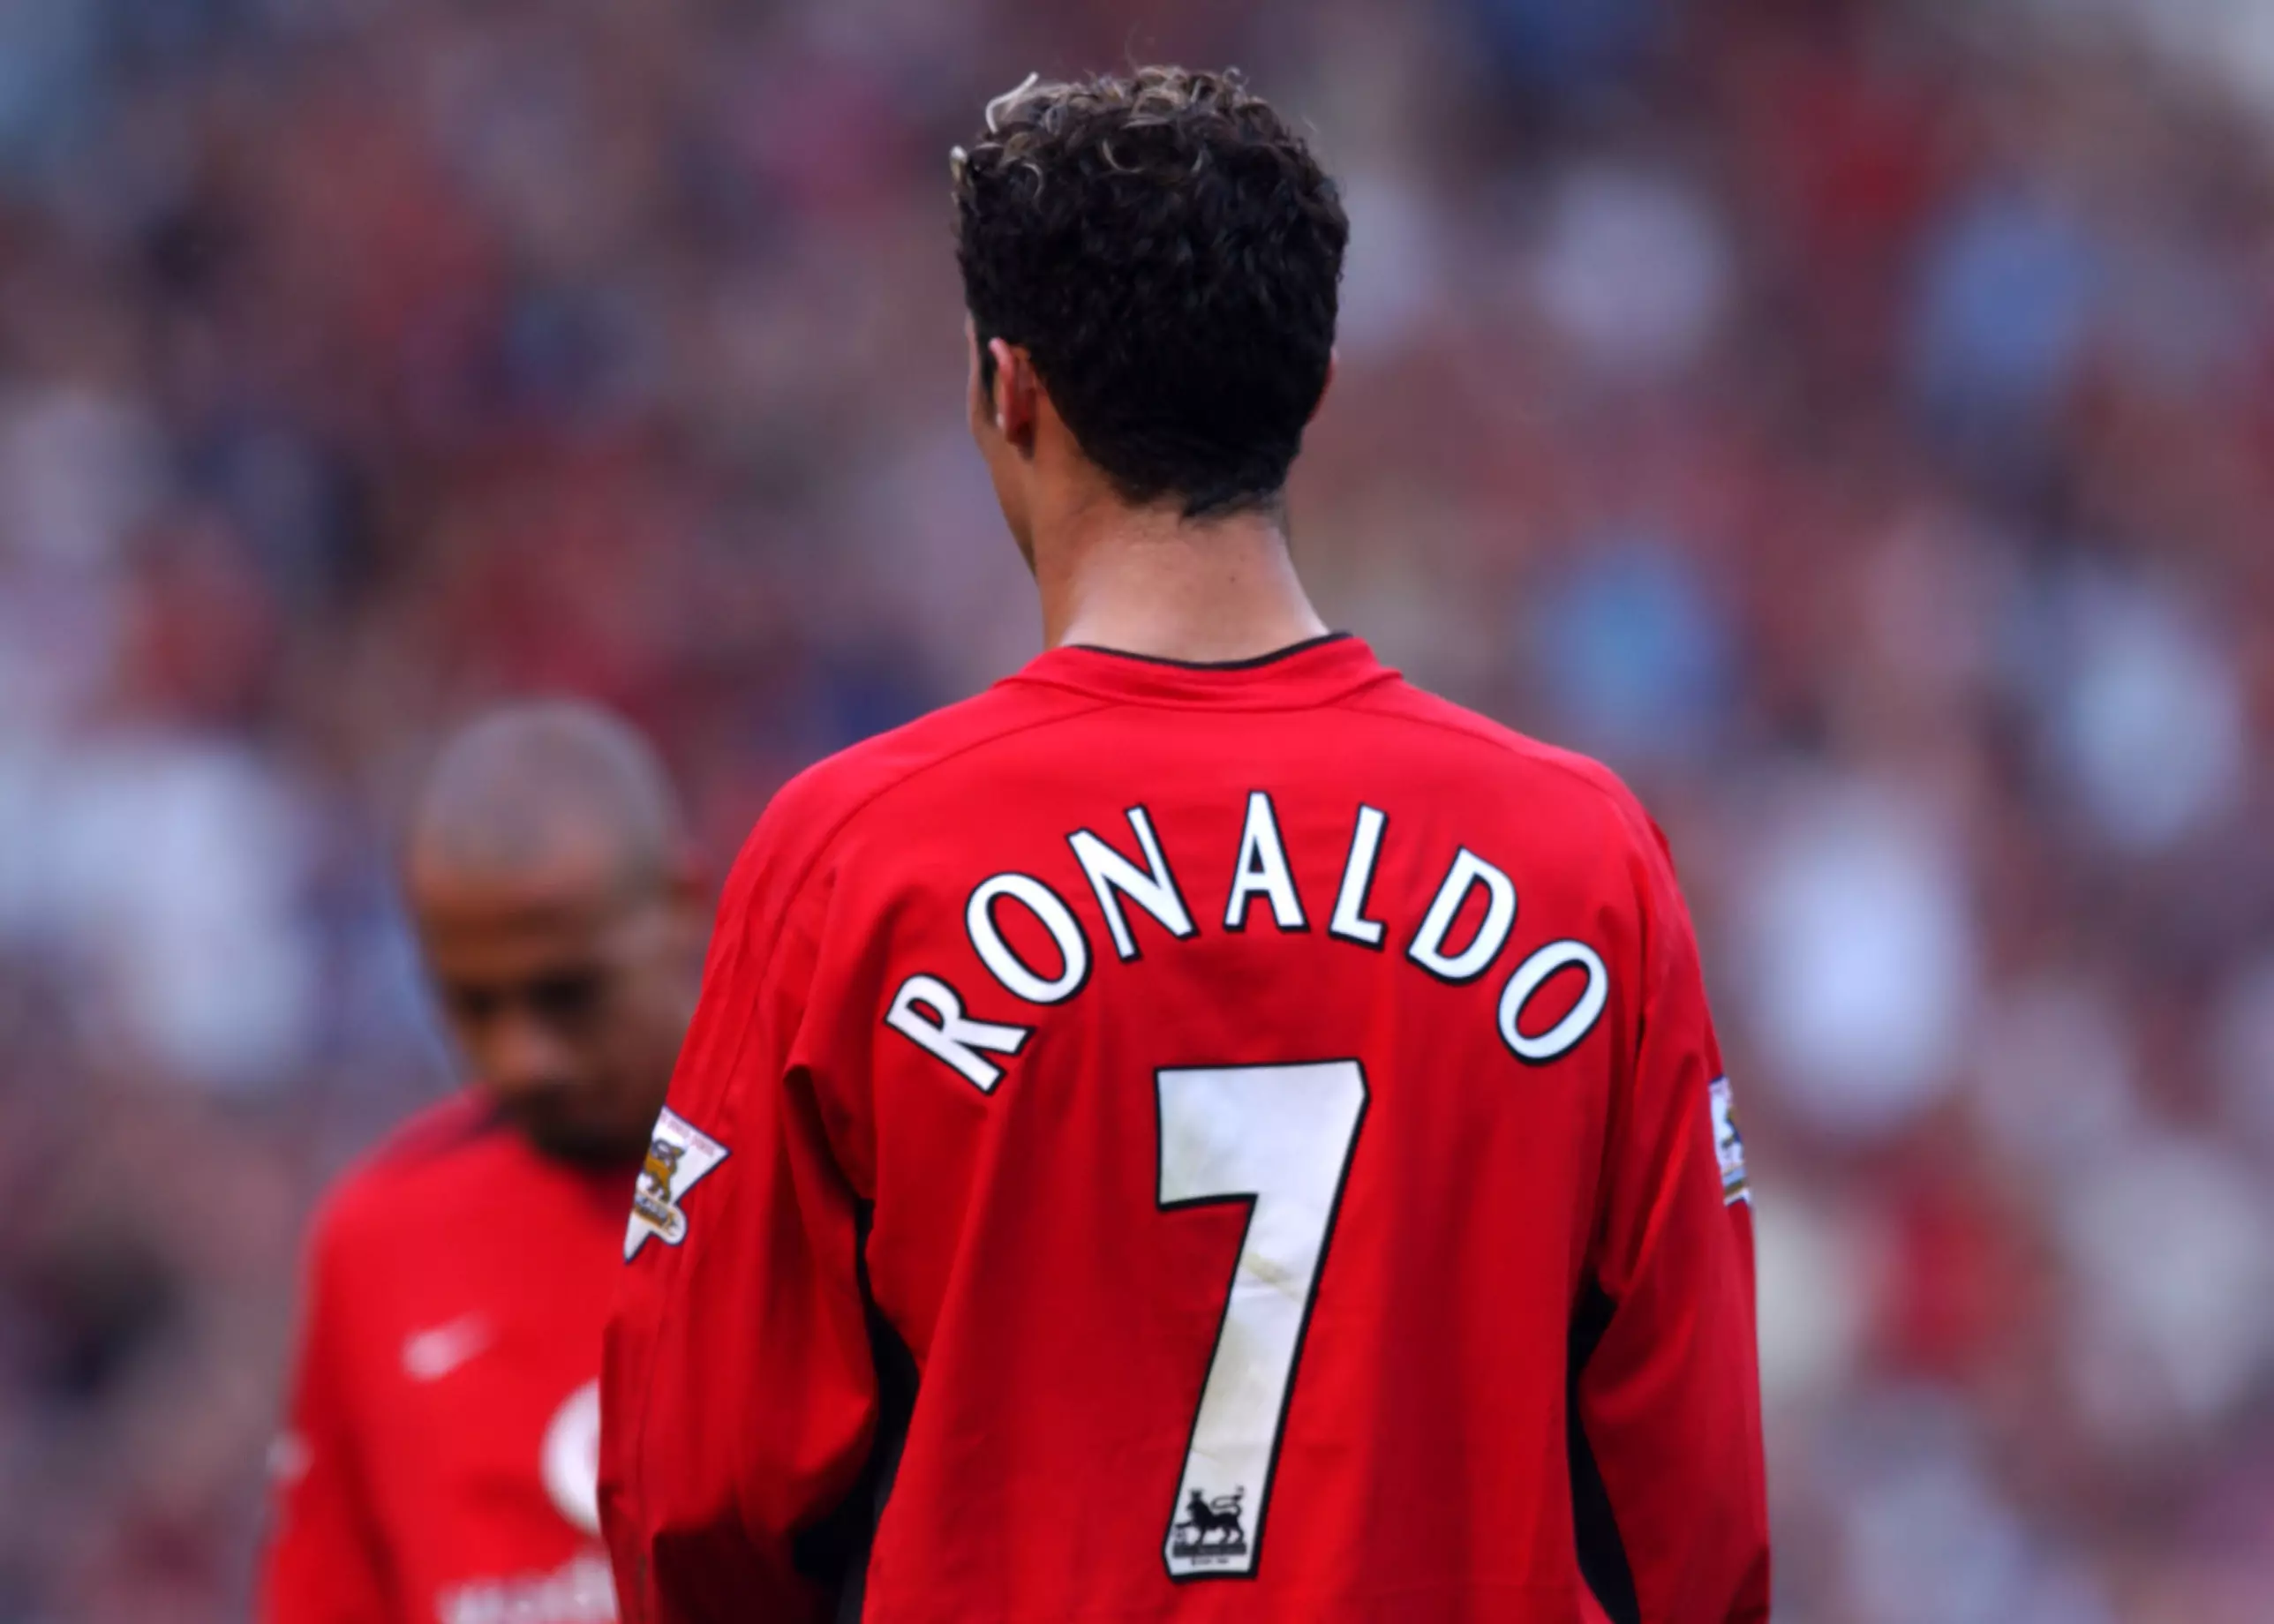 Ronaldo during his United debut. Image: PA